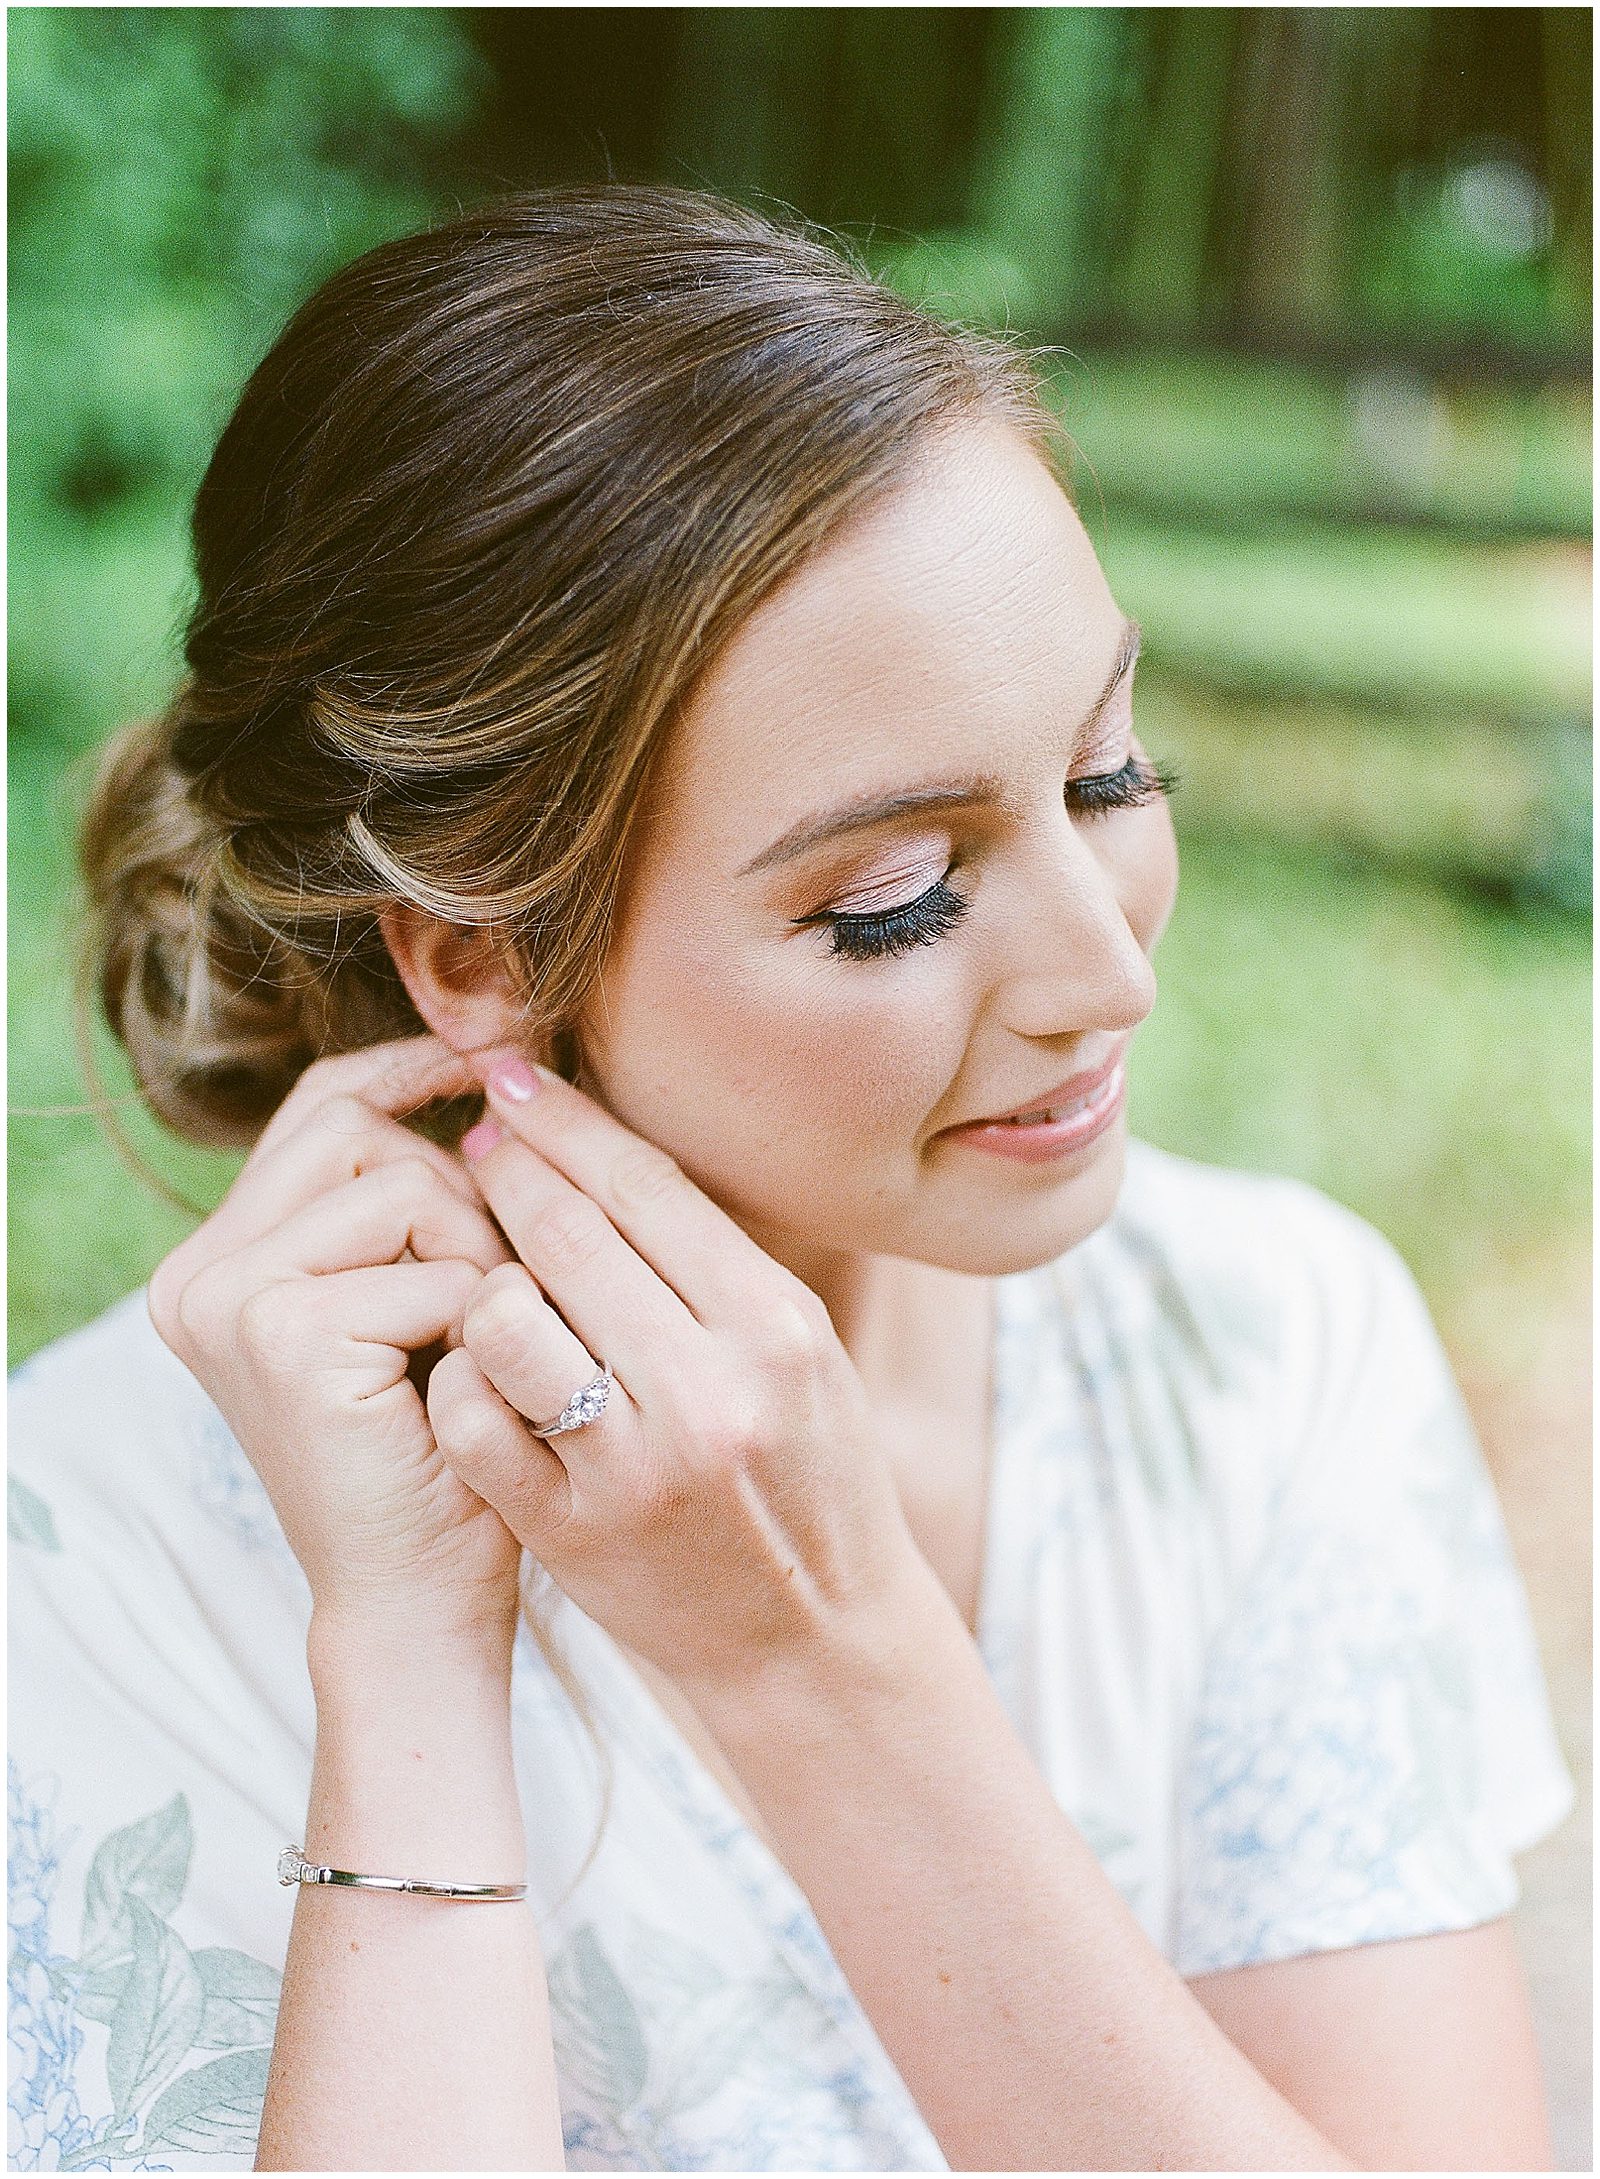 Bride Putting in Earrings Photo